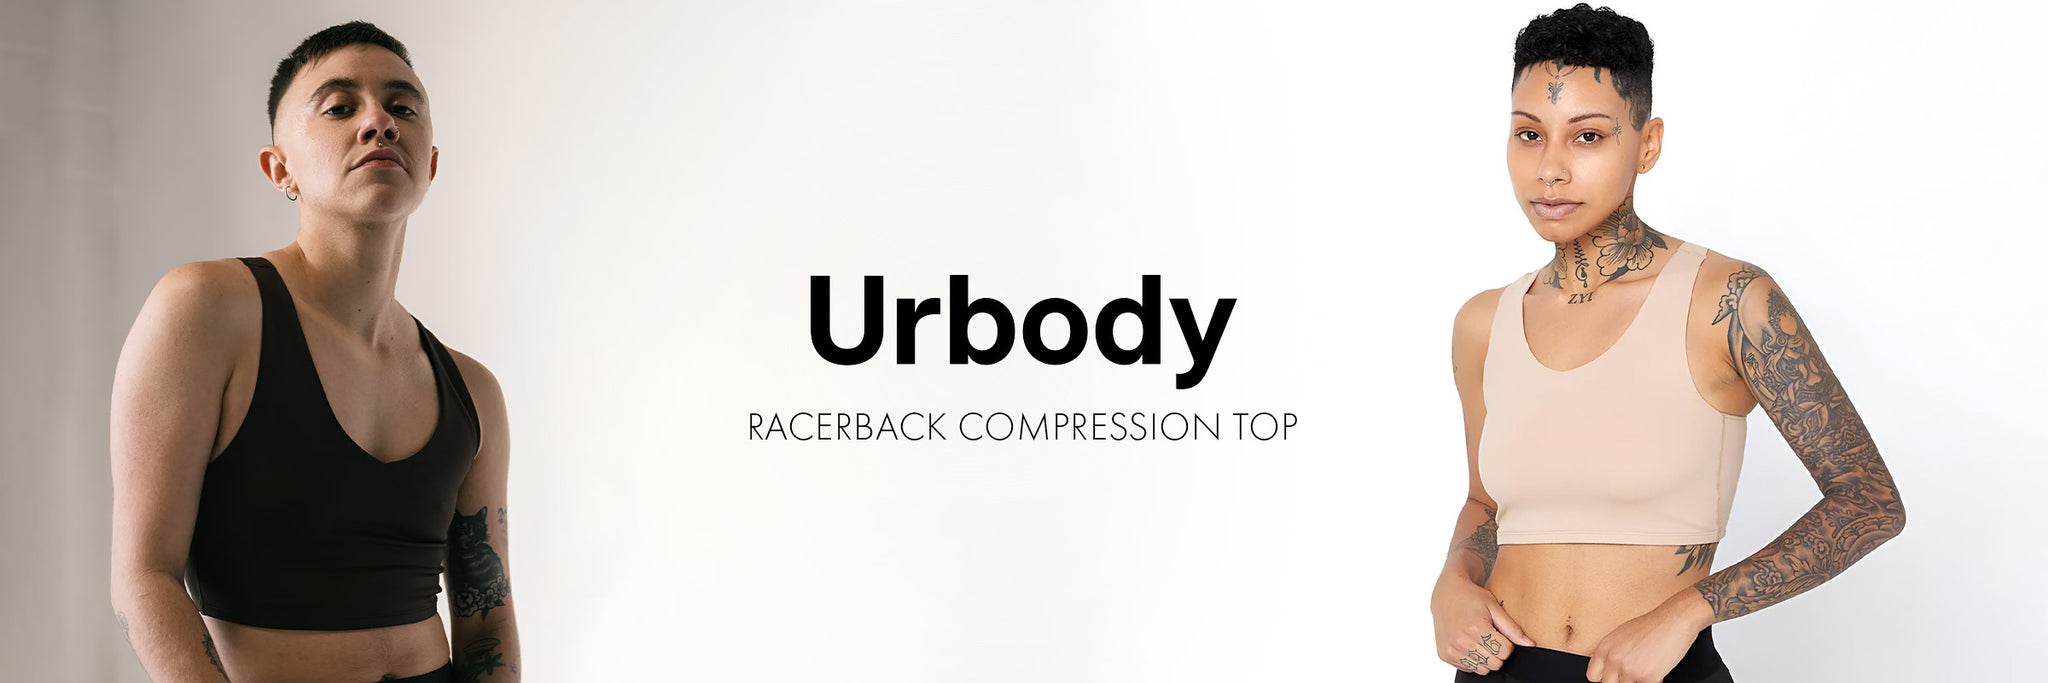 Urbody Racerback Compression Top